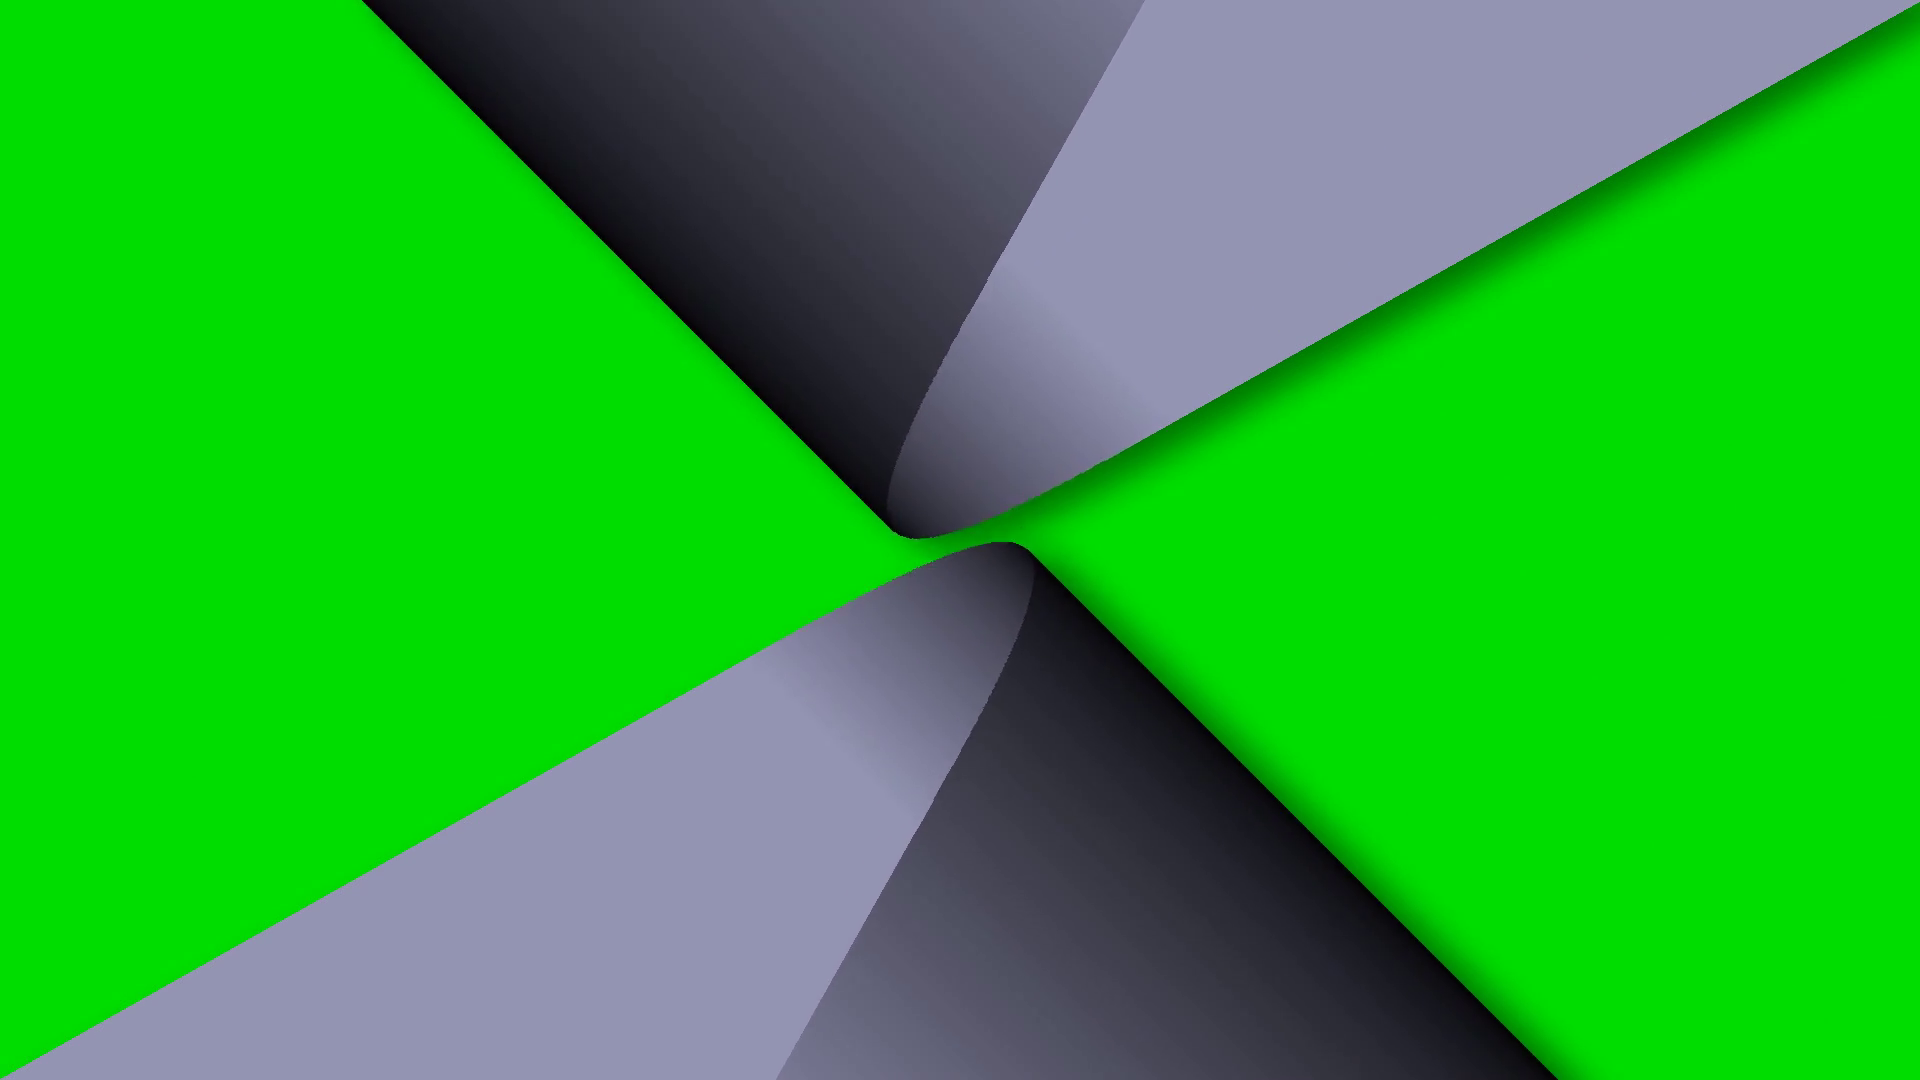 Paper Cut Diagonally Includes Green Screen